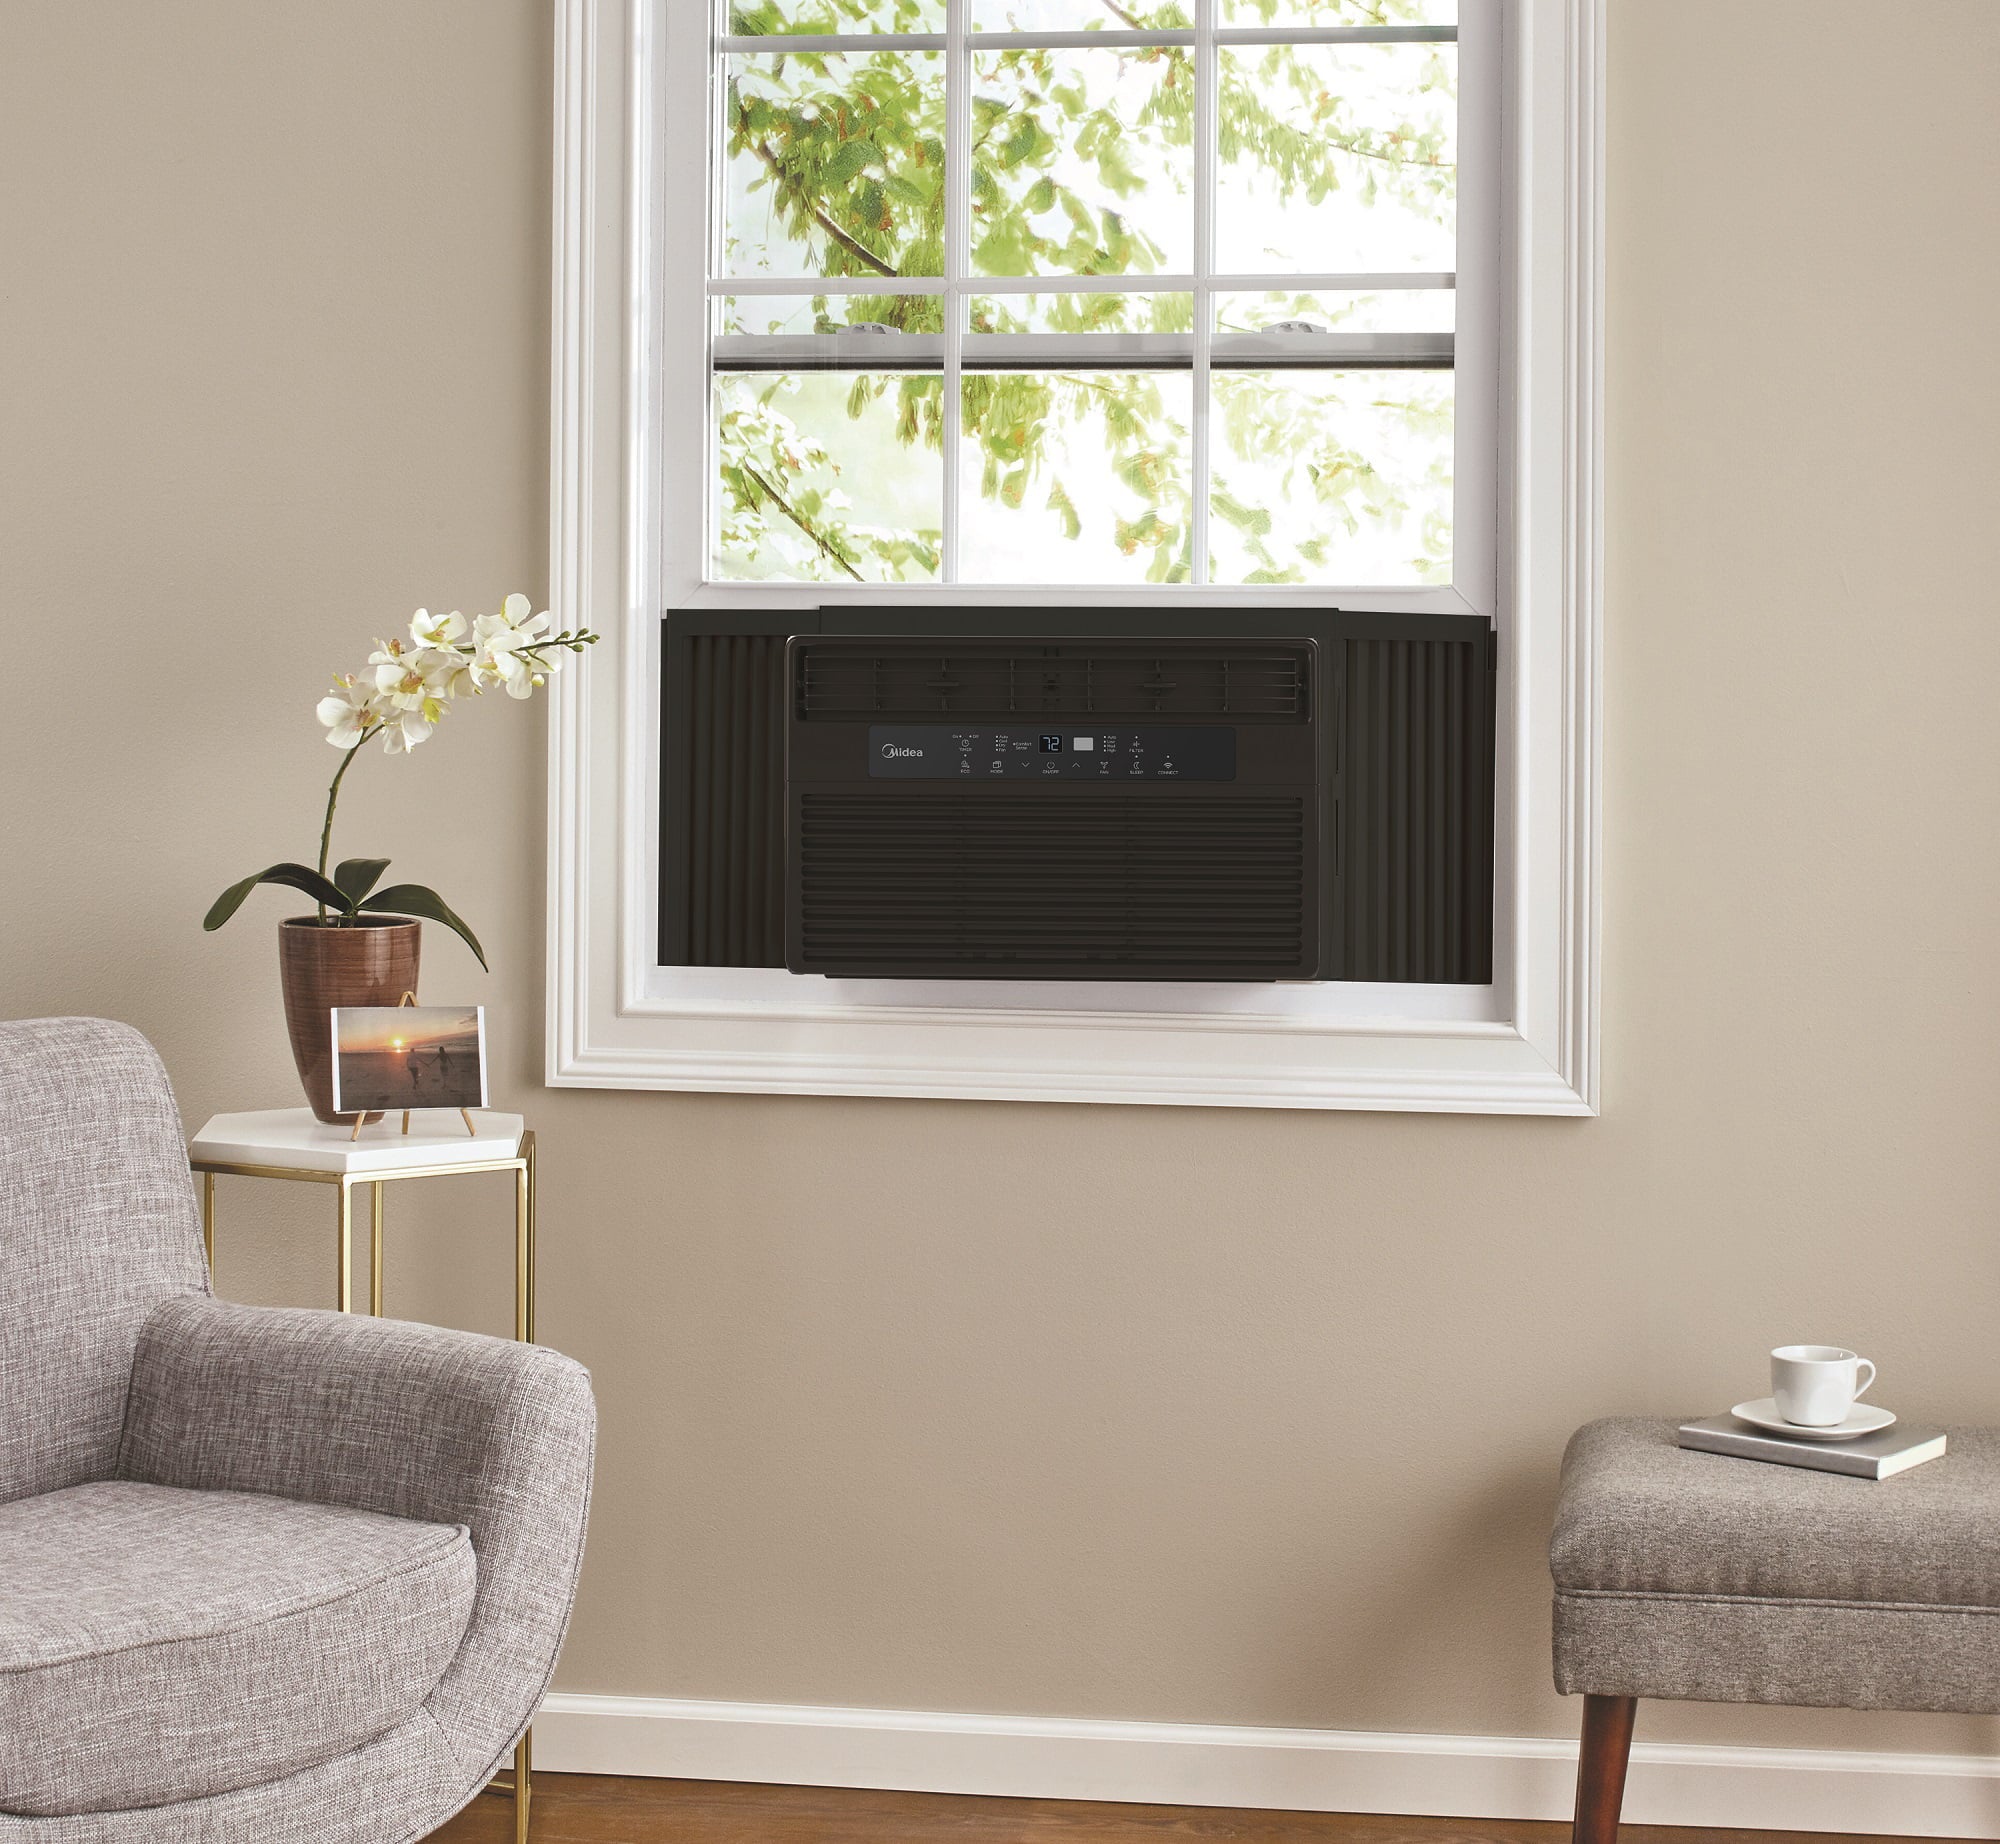 Midea 8,000 BTU 115V Smart Window Air Conditioner with Comfort Sense Remote, Black, MAW08S1WBL